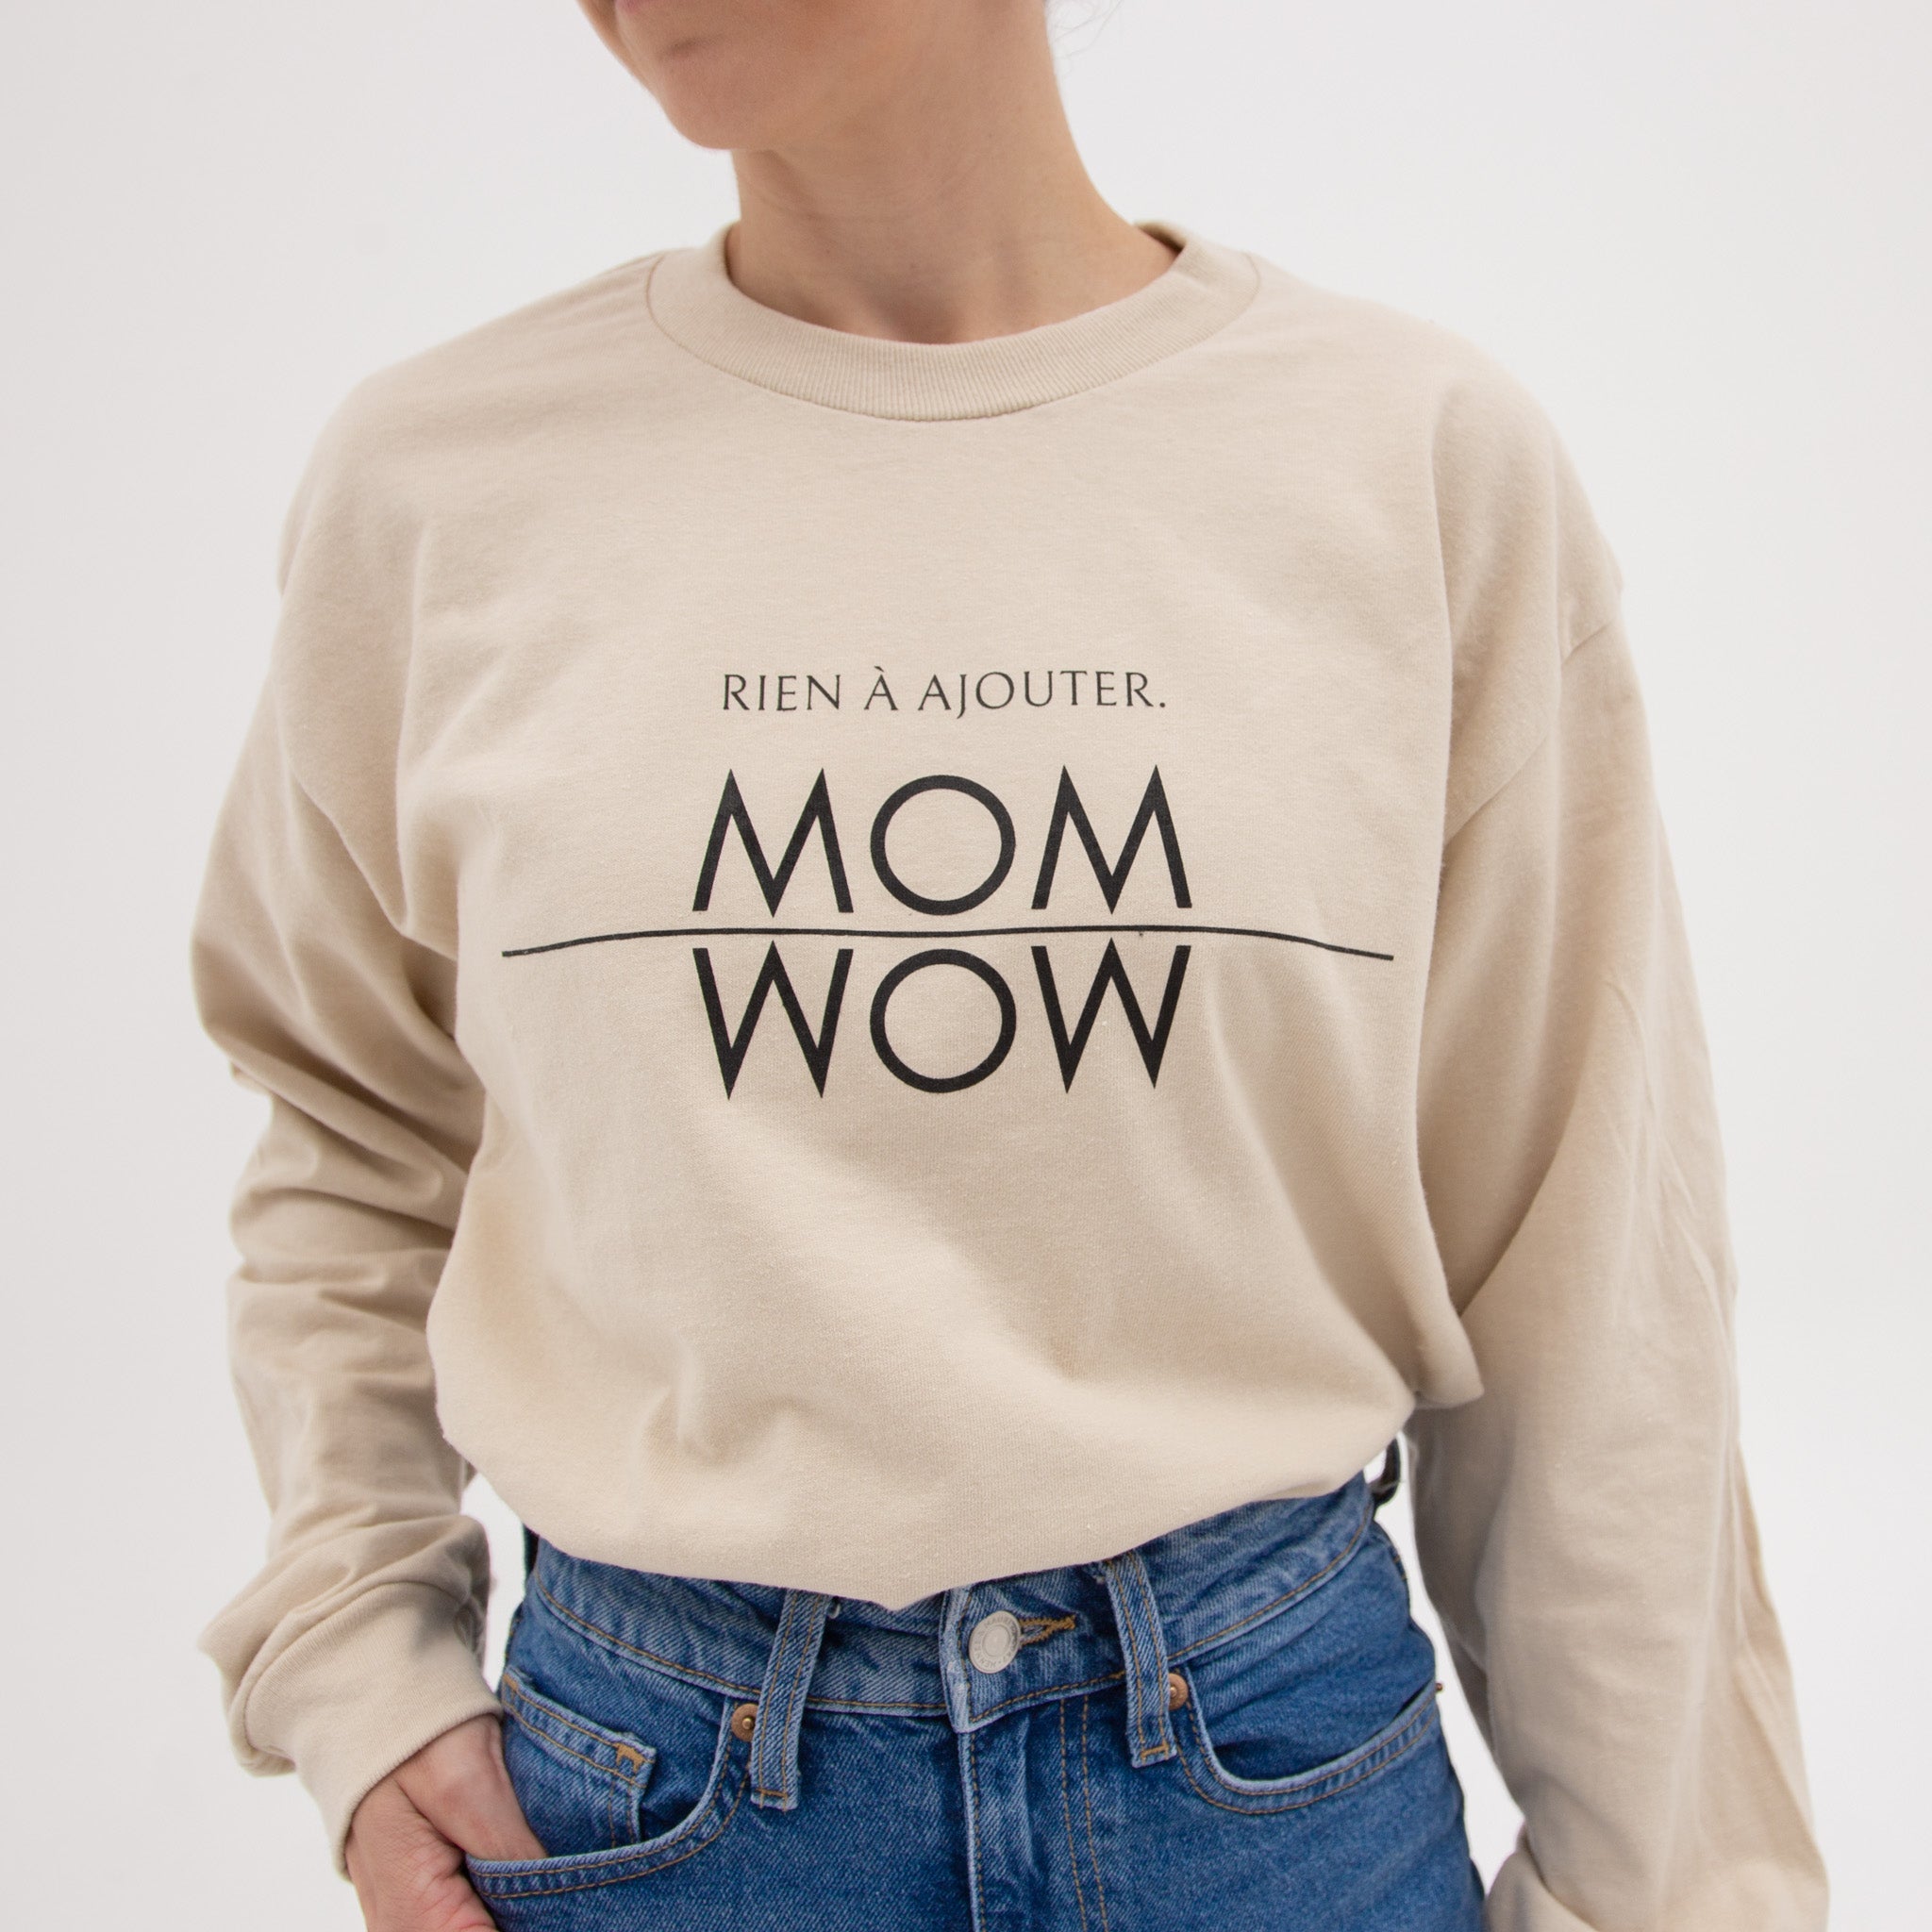 Chandail pour femmes-Wow/Mom